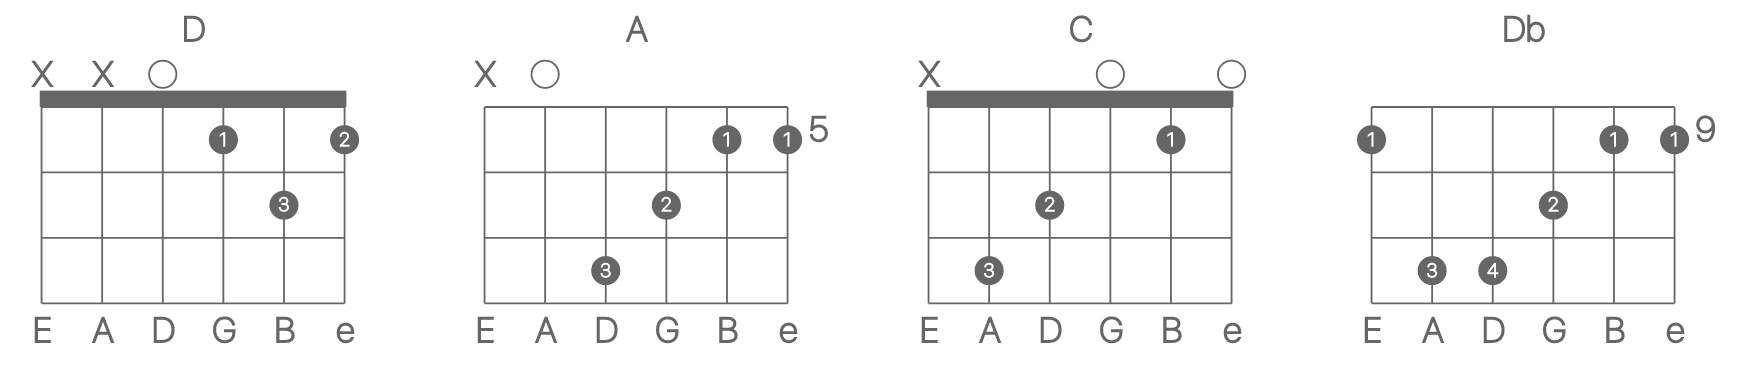 image of chord diagrams